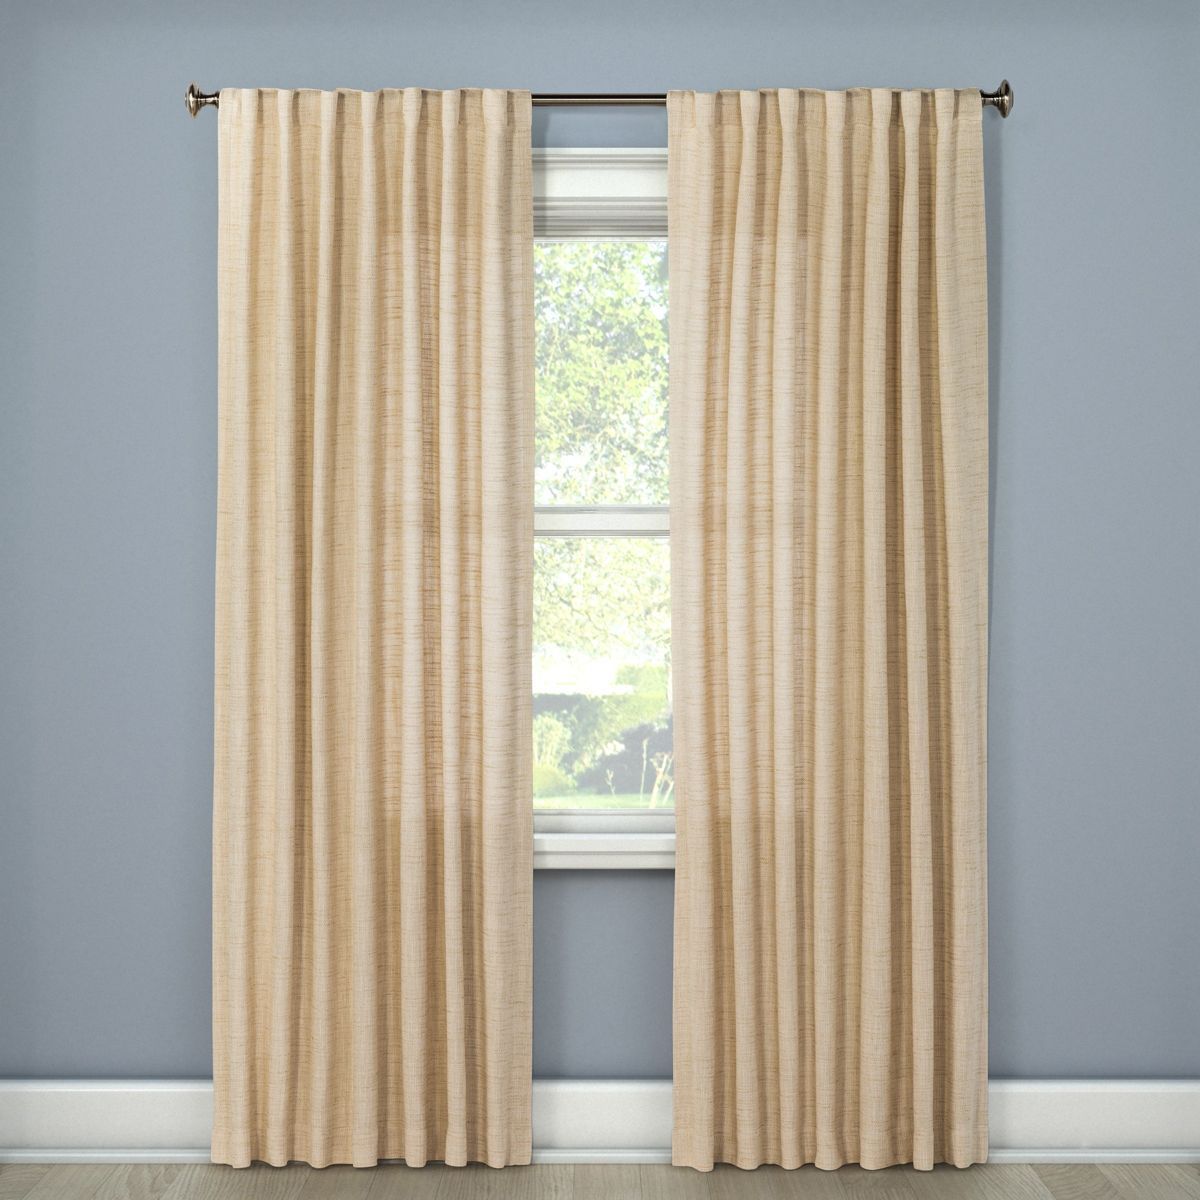 1pc Light Filtering Textured Weave Window Curtain Panel Cream - Threshold™ | Target